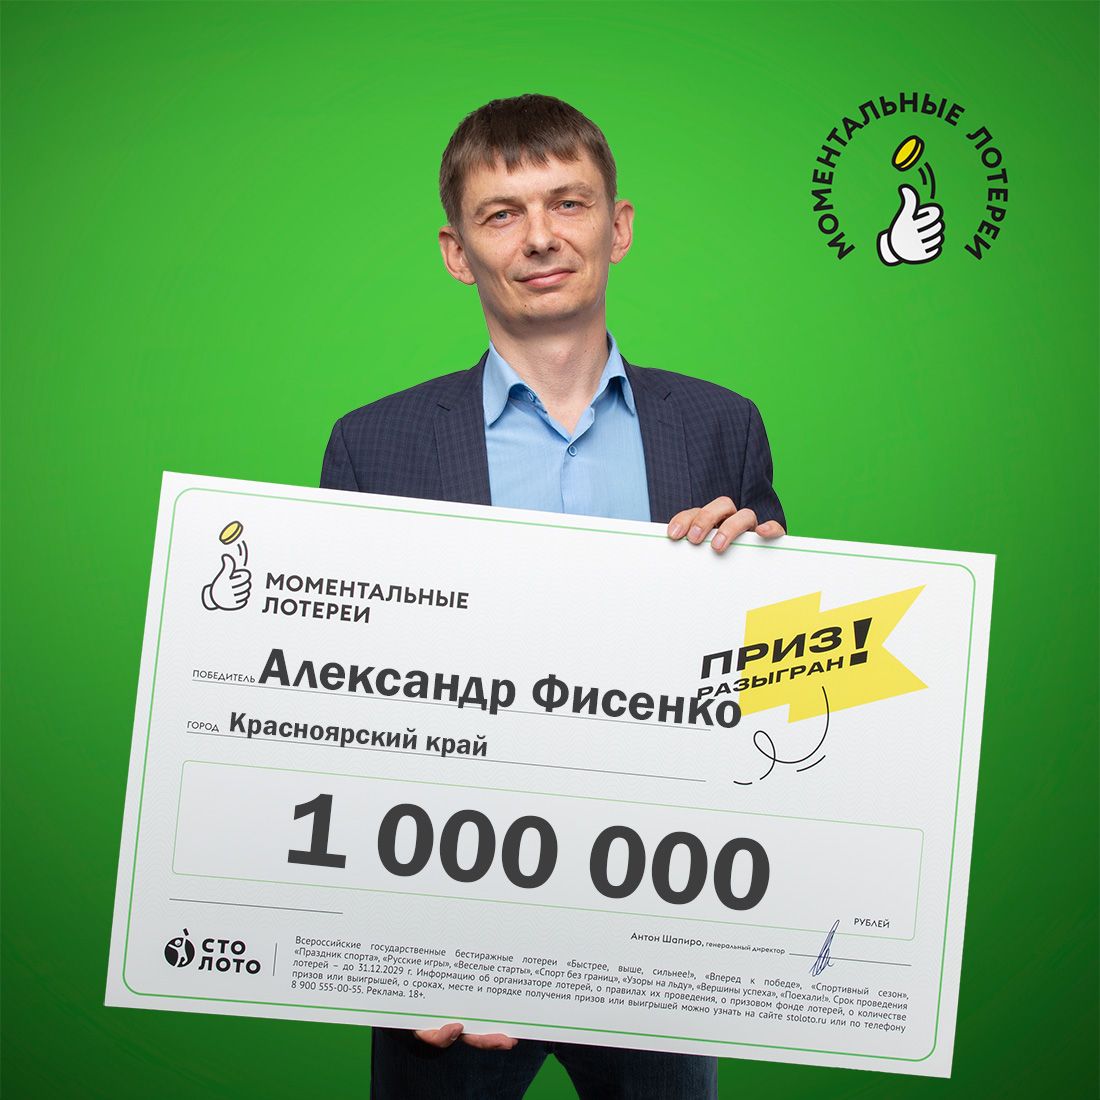 Александр Фисенко